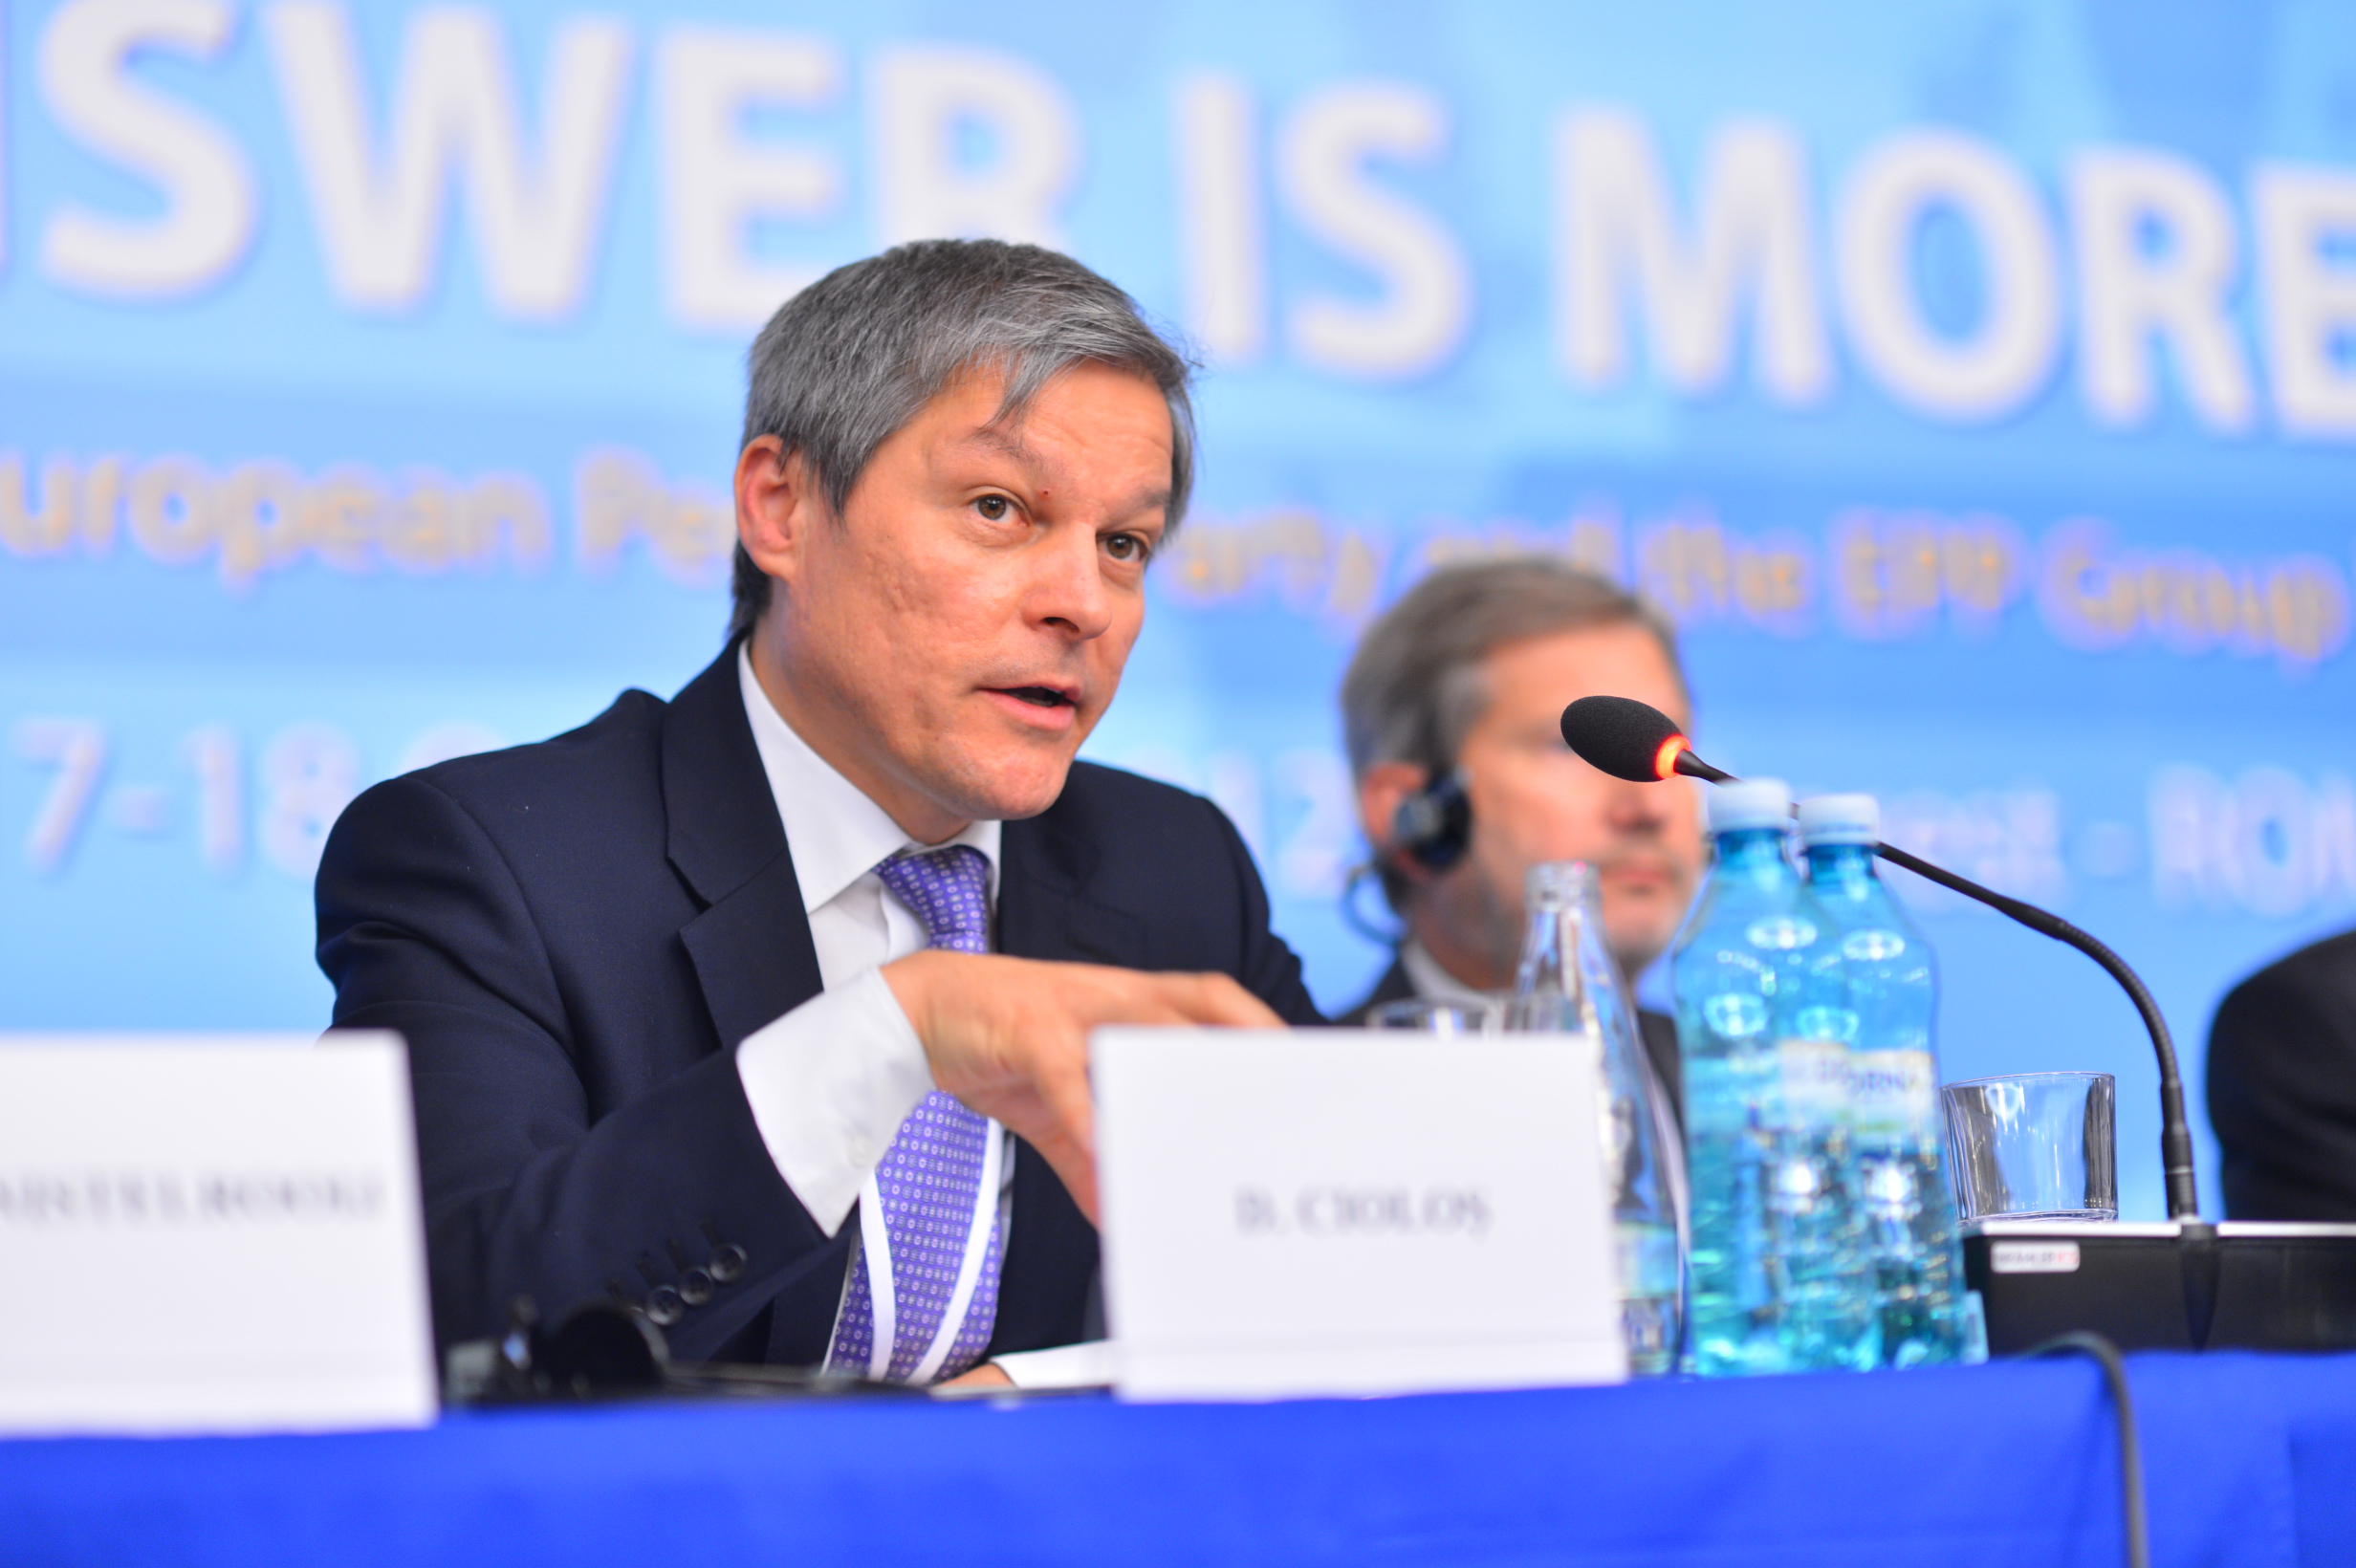 Dacian Cioloş pártot alapít – a Románia 100 platform civil mozgalom marad